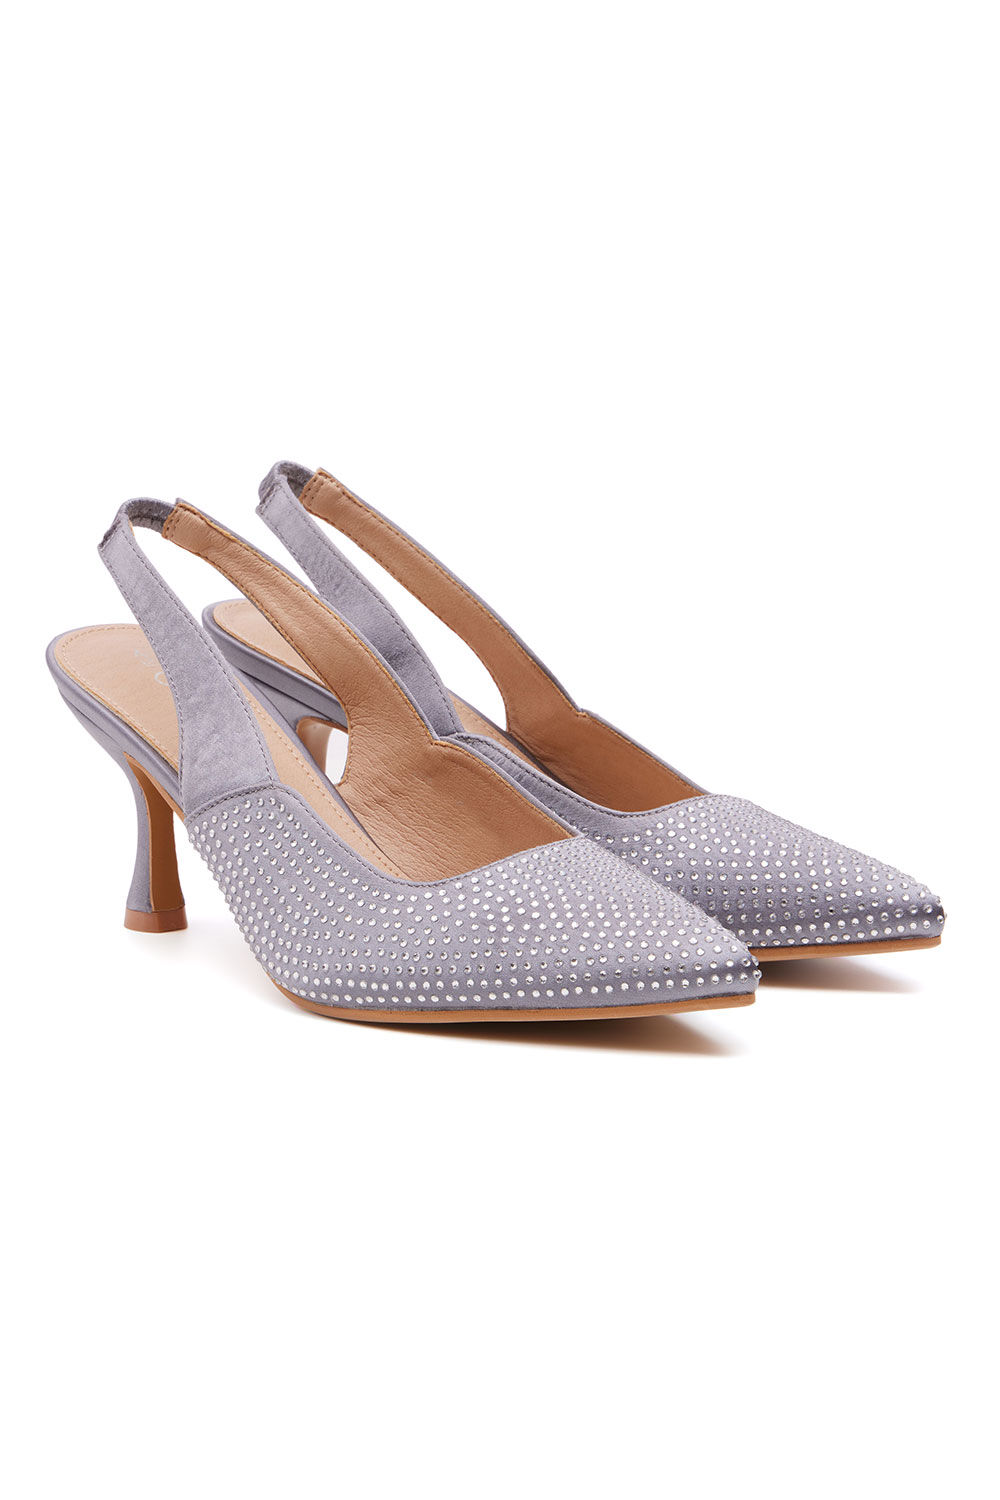 Comfort Plus Silver - Strap Design Heels With Diamante Detail, Size: 3